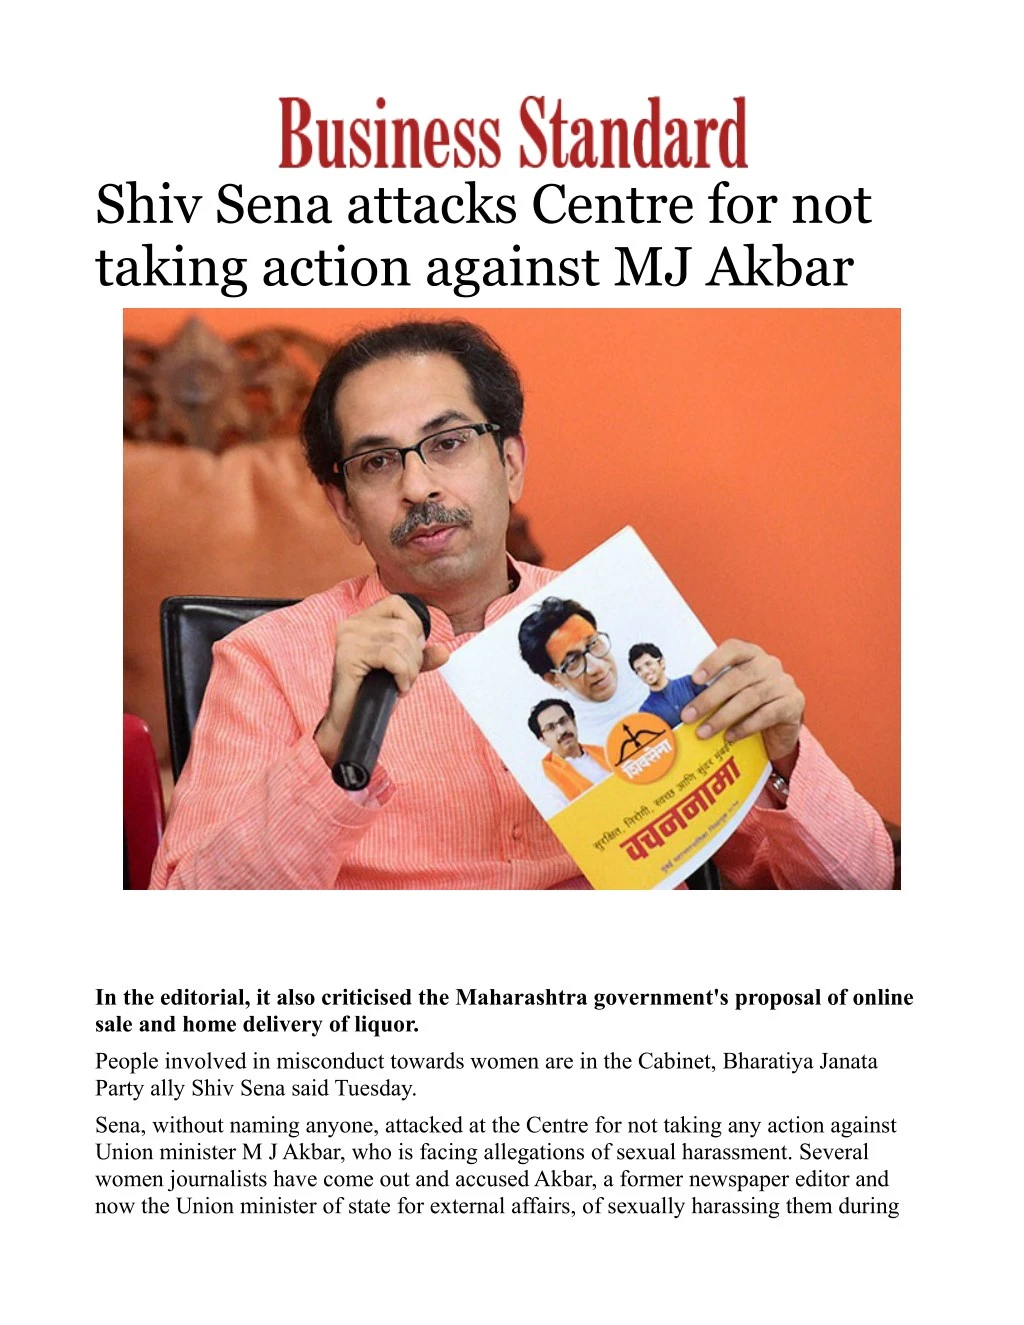 shiv sena attacks centre for not taking action